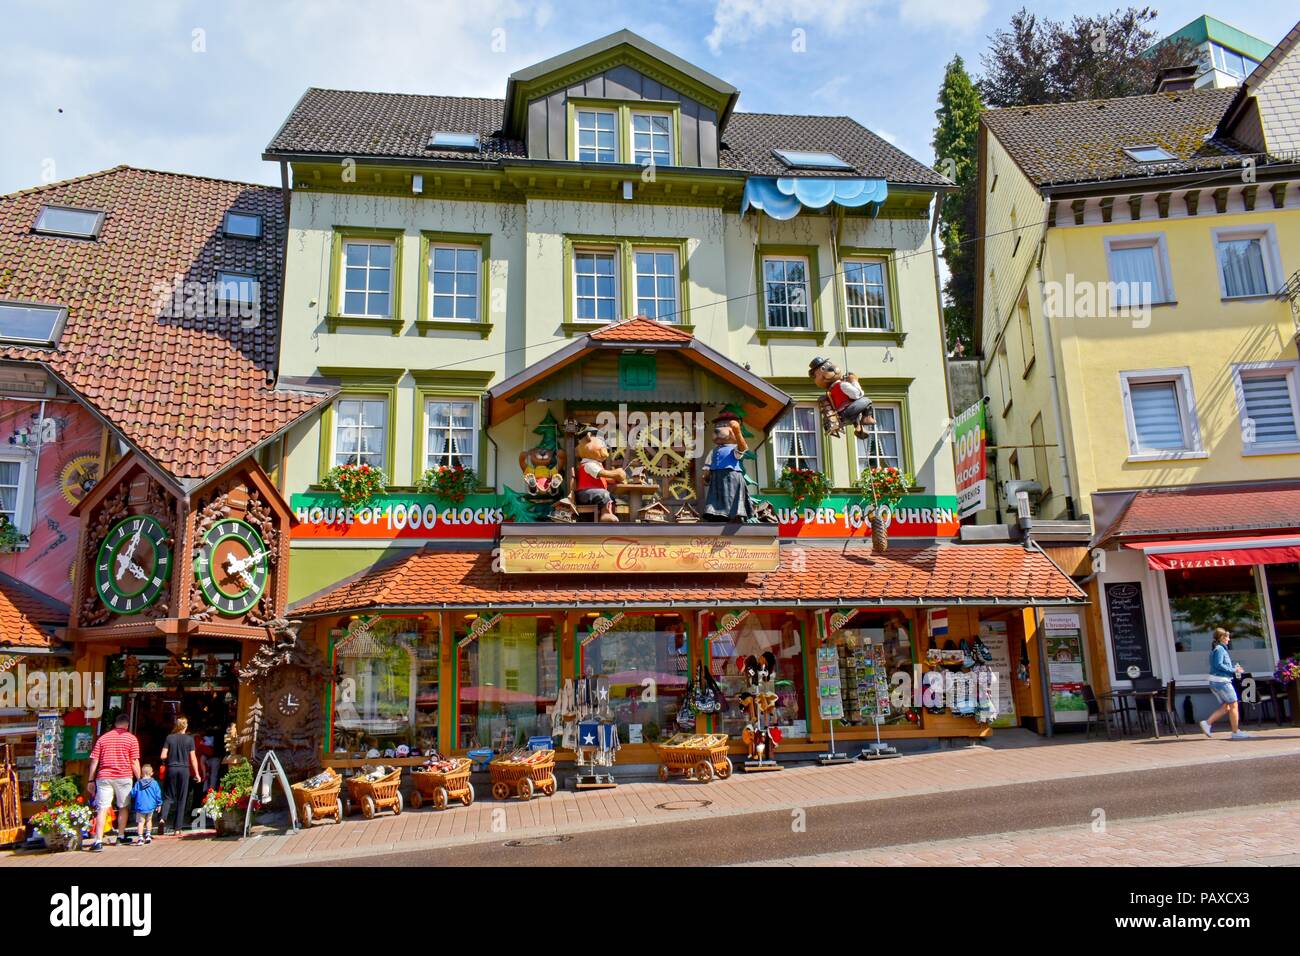 Triberg, Schwarzwald-Baar District, Germany - July 16, 2018: House of 1000 clocks, souvenir shop in the heart of Triberg. Stock Photo